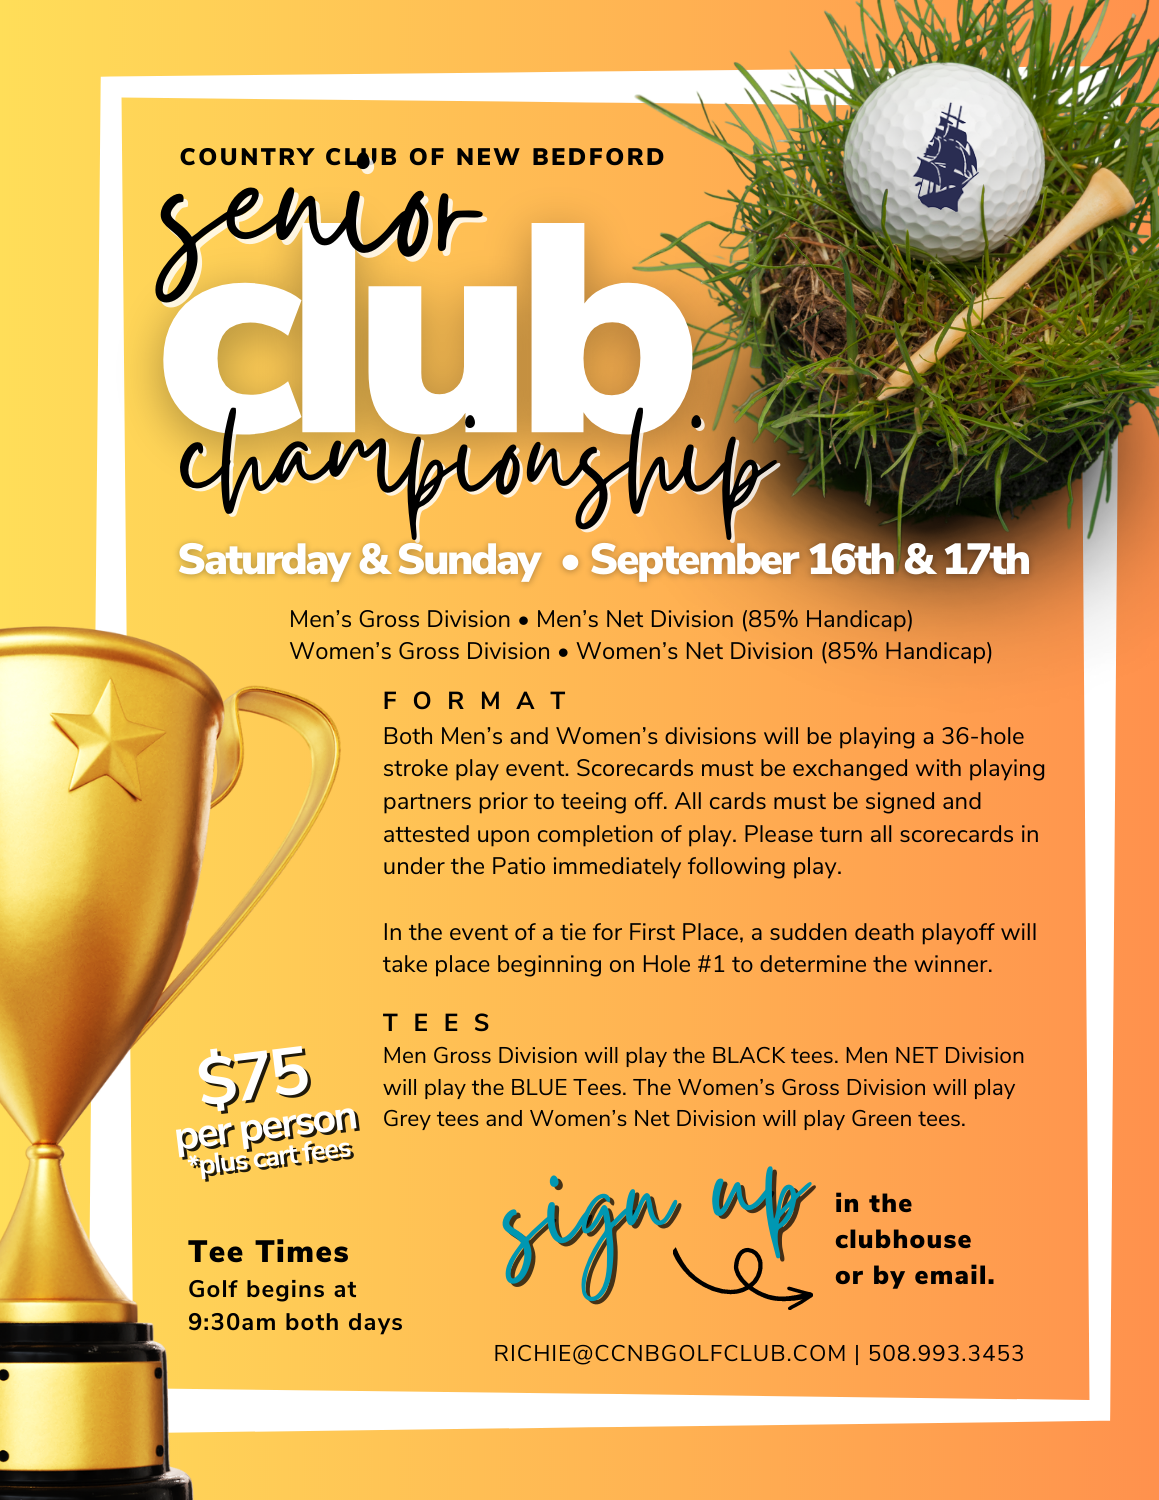 CCNB Senior Club Championship flyer 1